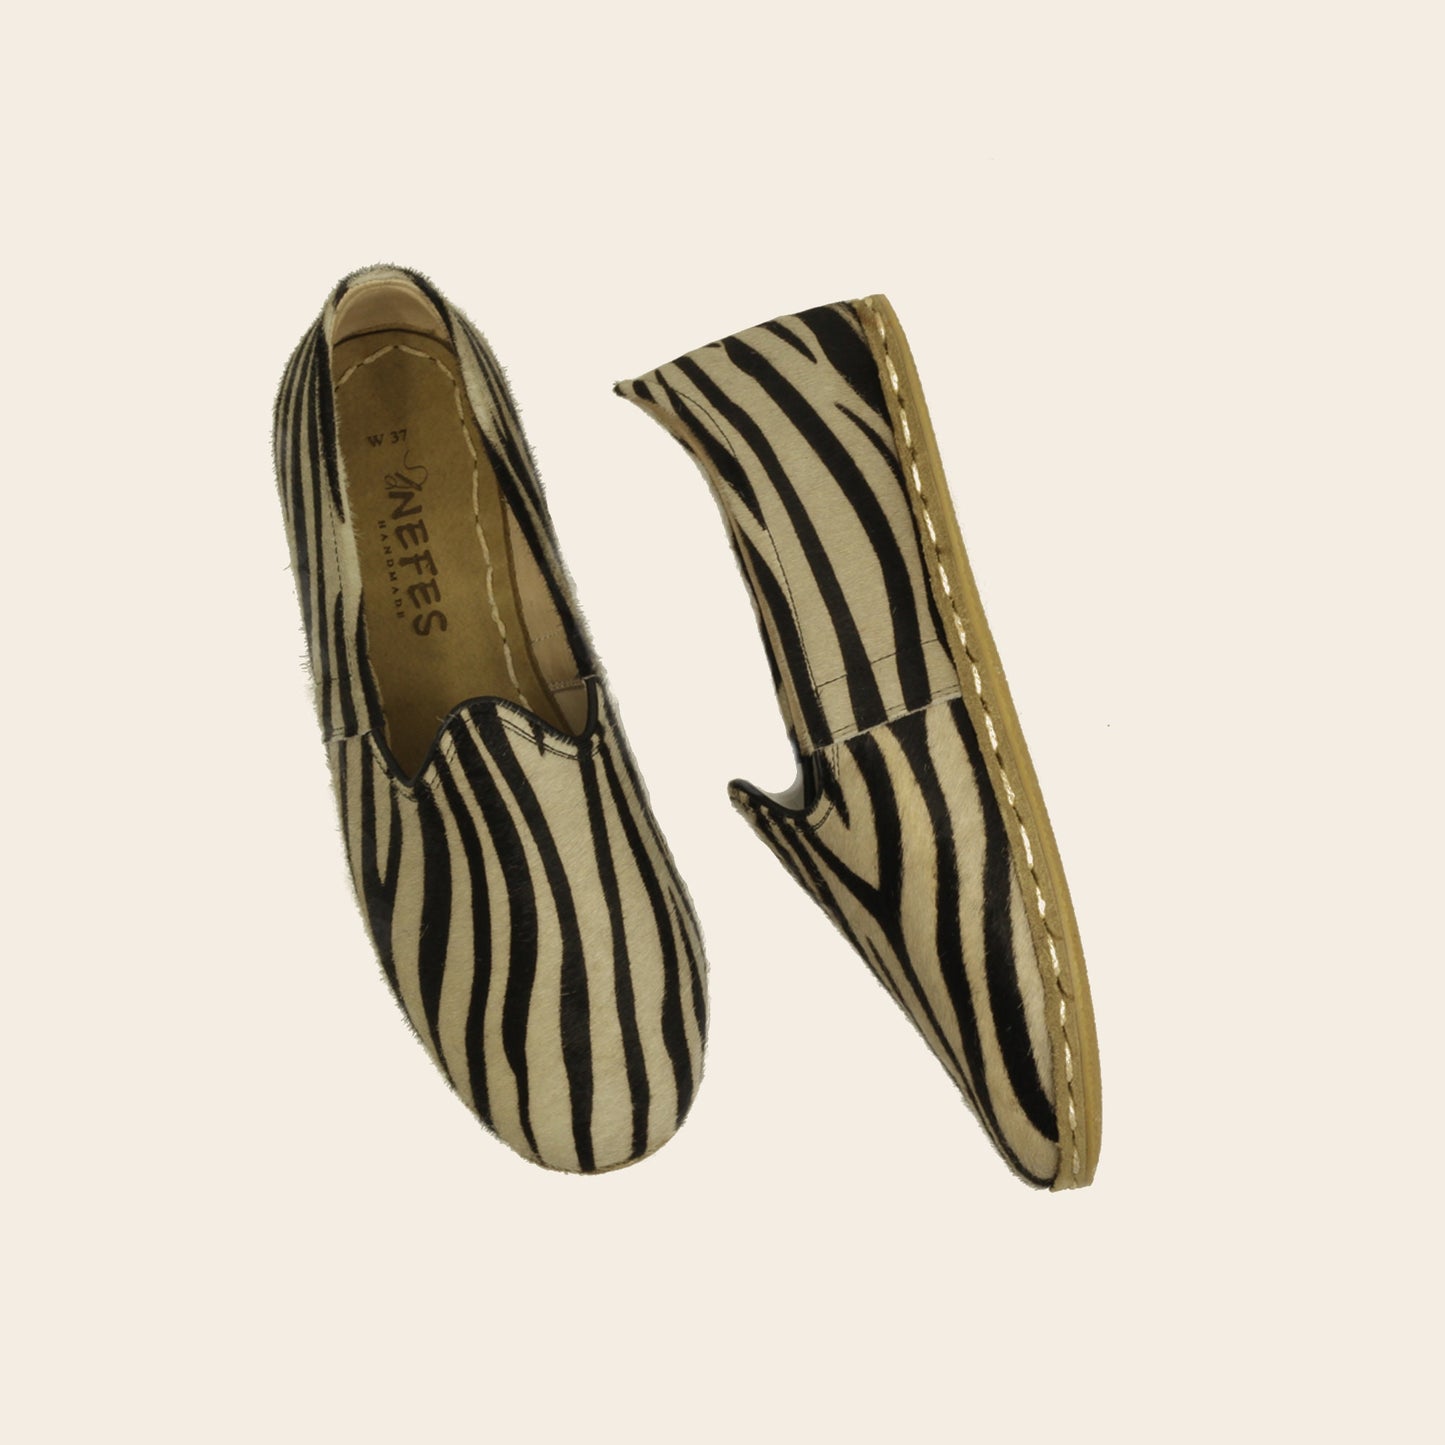 Women Shoes, Handmade Zebra Print Hairy Leather, Turkish Yemeni Rubber Sole